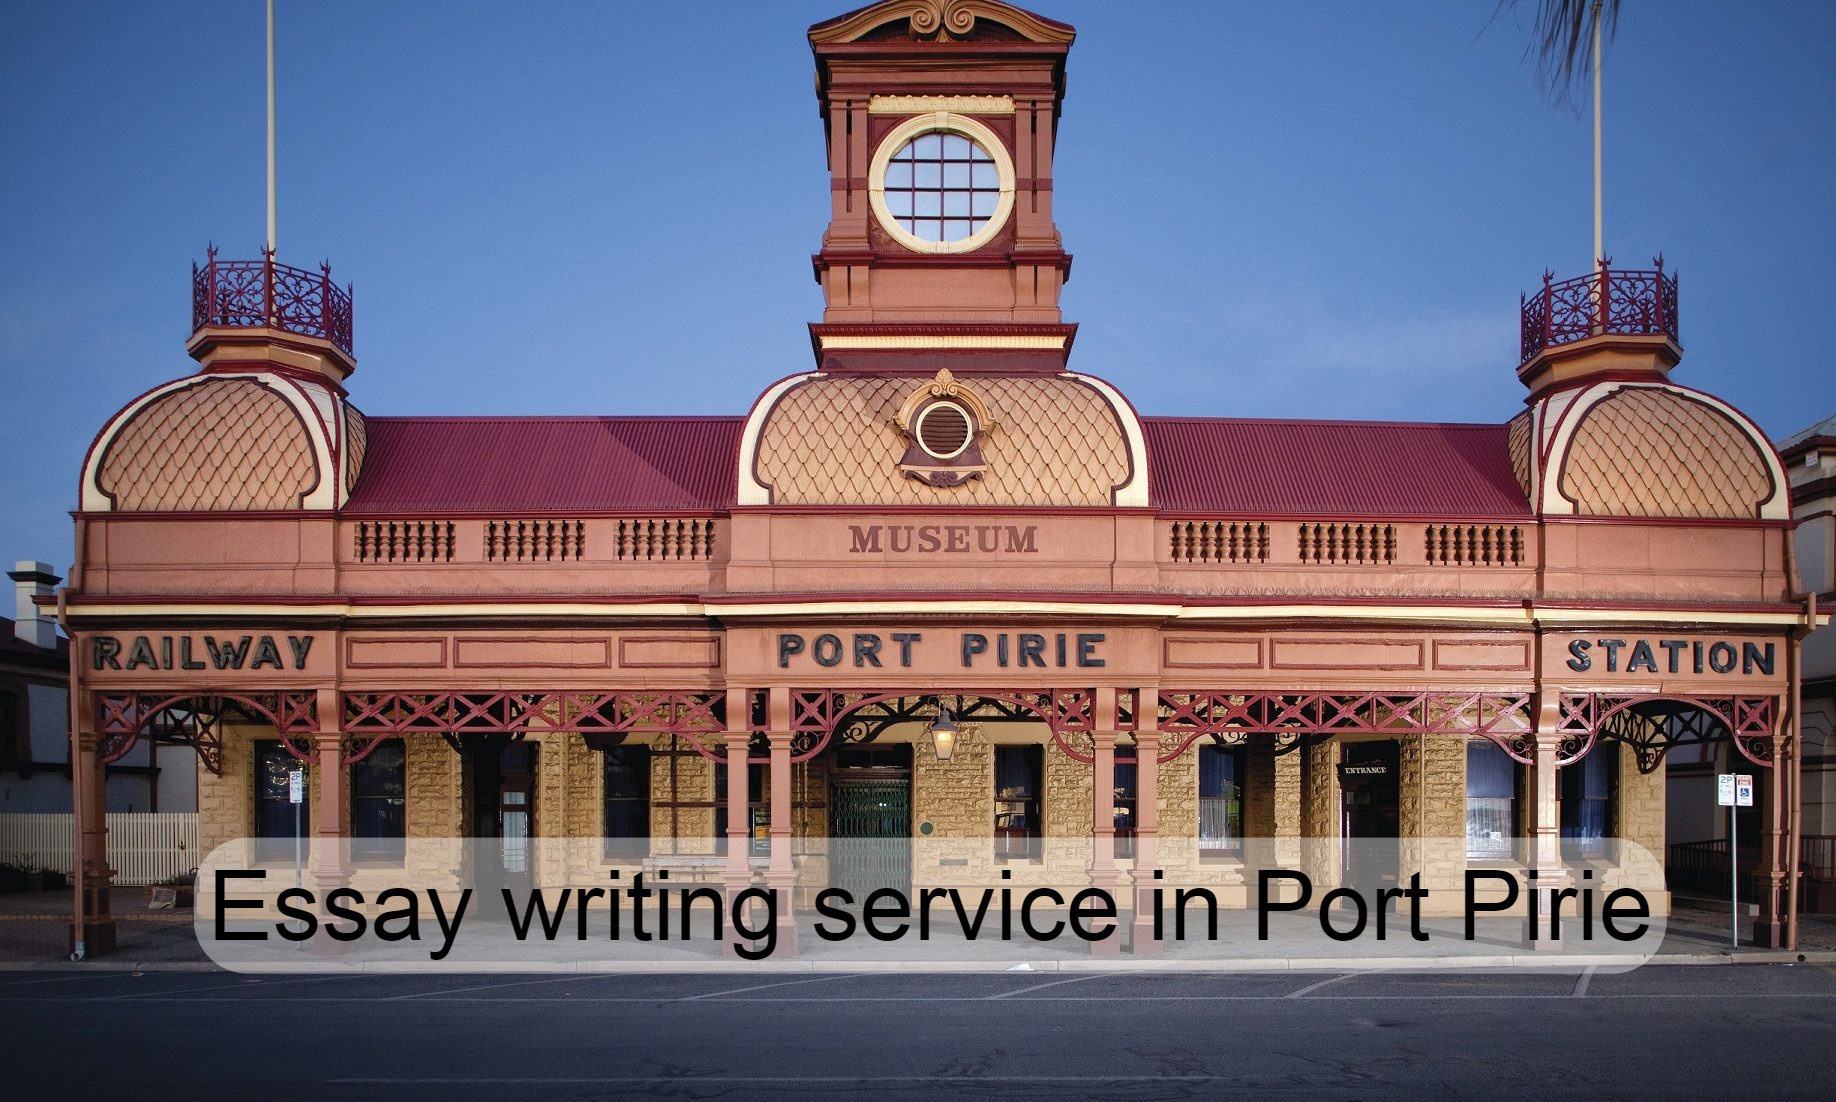 Essay writing service in Port Pirie